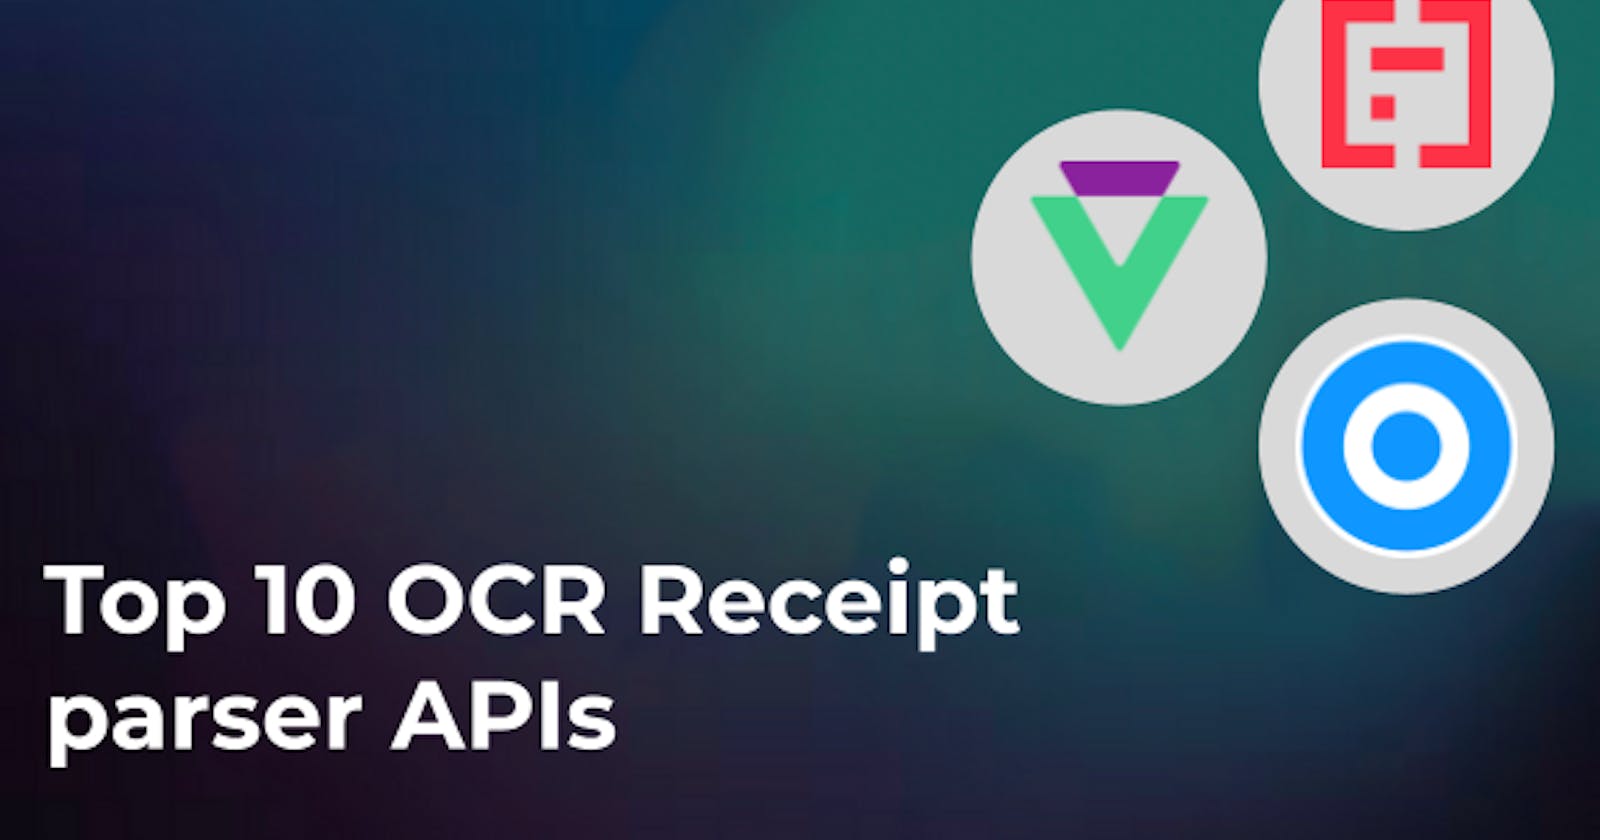 Top 10 OCR Receipt Parser APIs